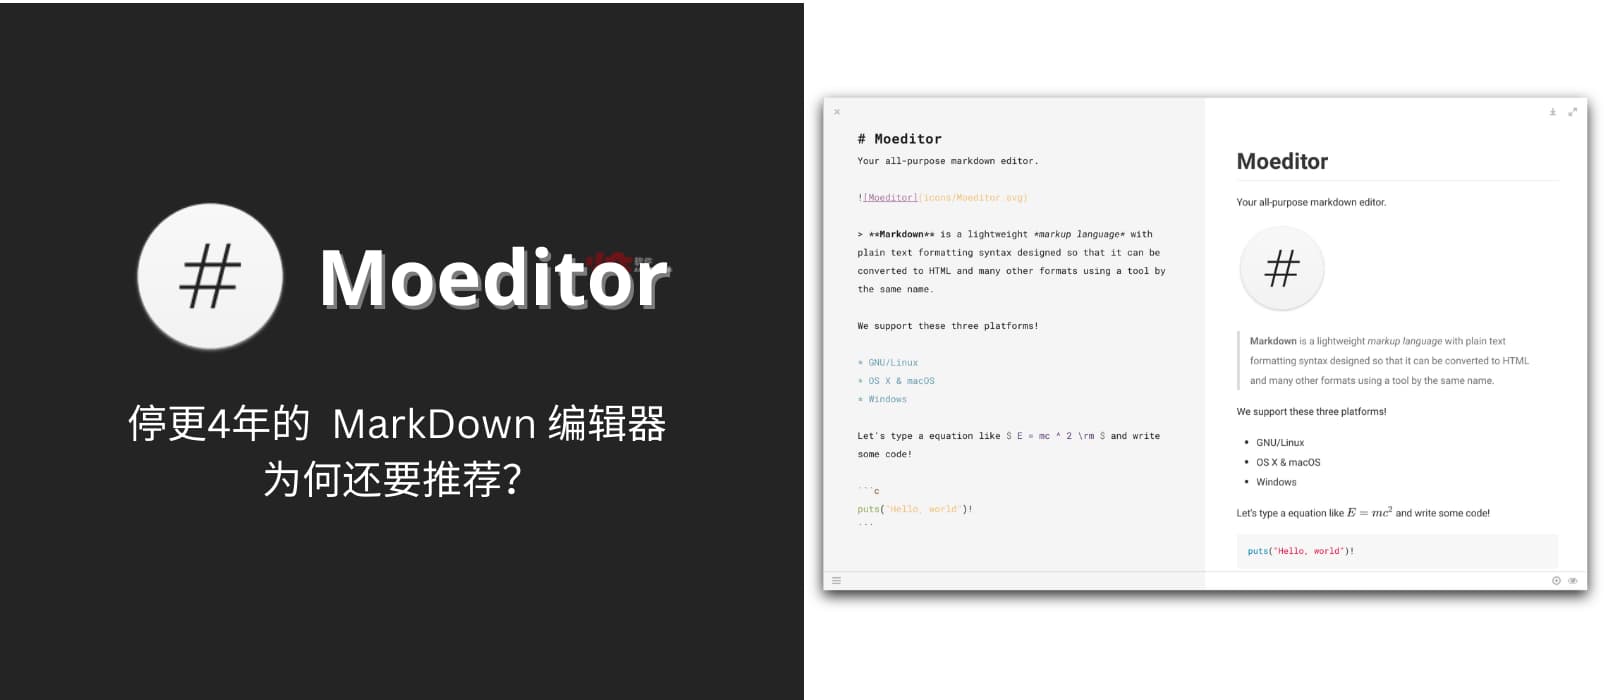 Moeditor - 为何要推荐一款已停更 4 年的 MarkDown 编辑器？